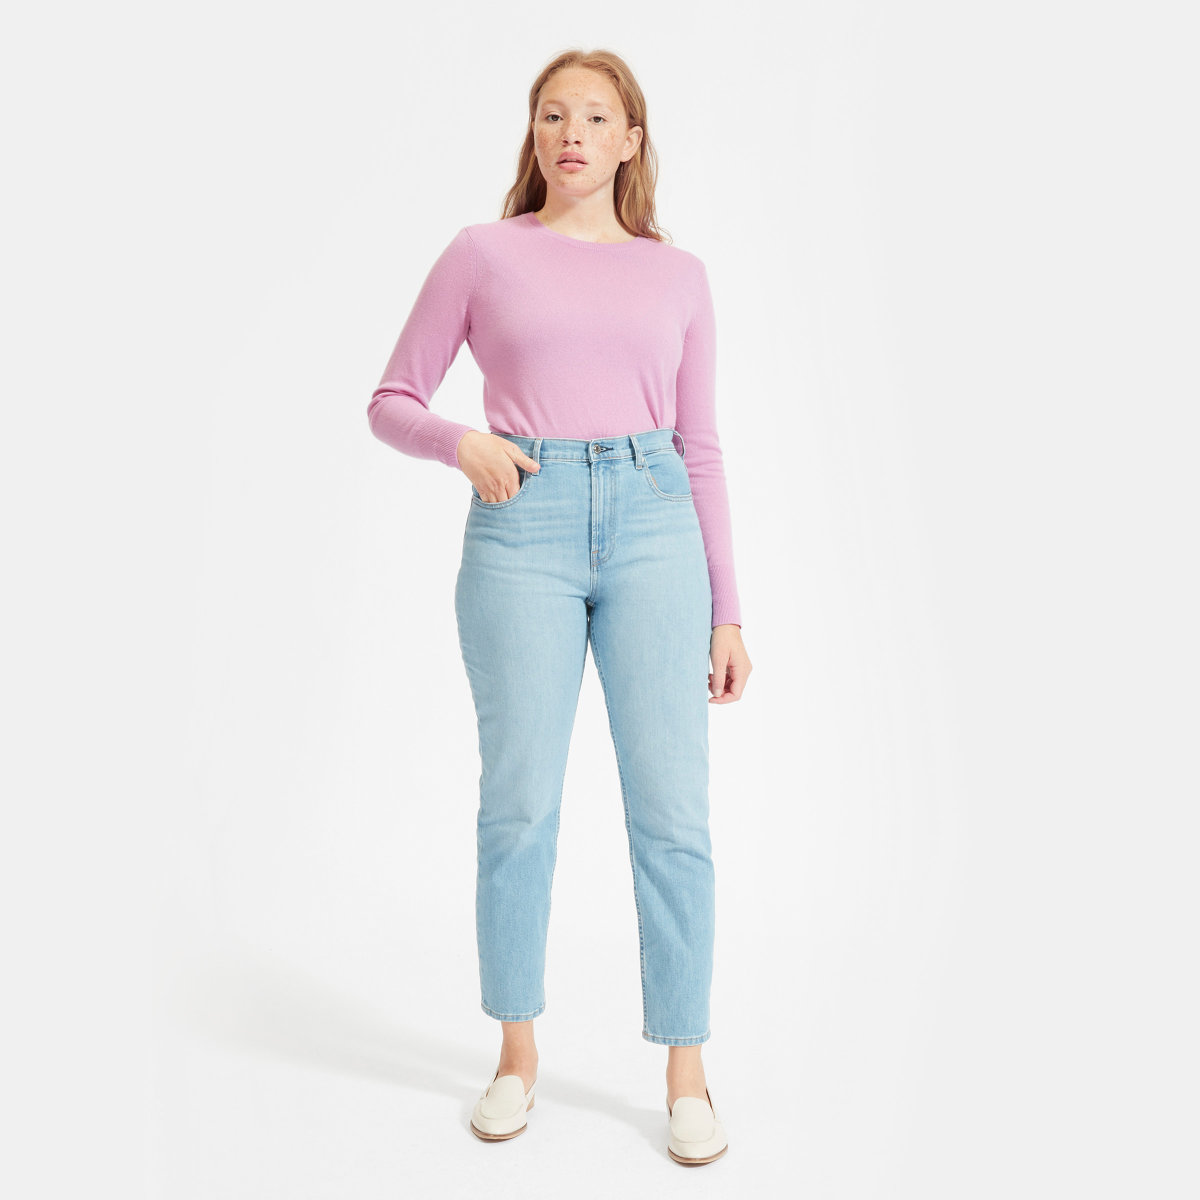 Everlane Choose What You Pay / Cashmere Crew Sweater - Sunshine Style, A Florida Based Fashion Blog